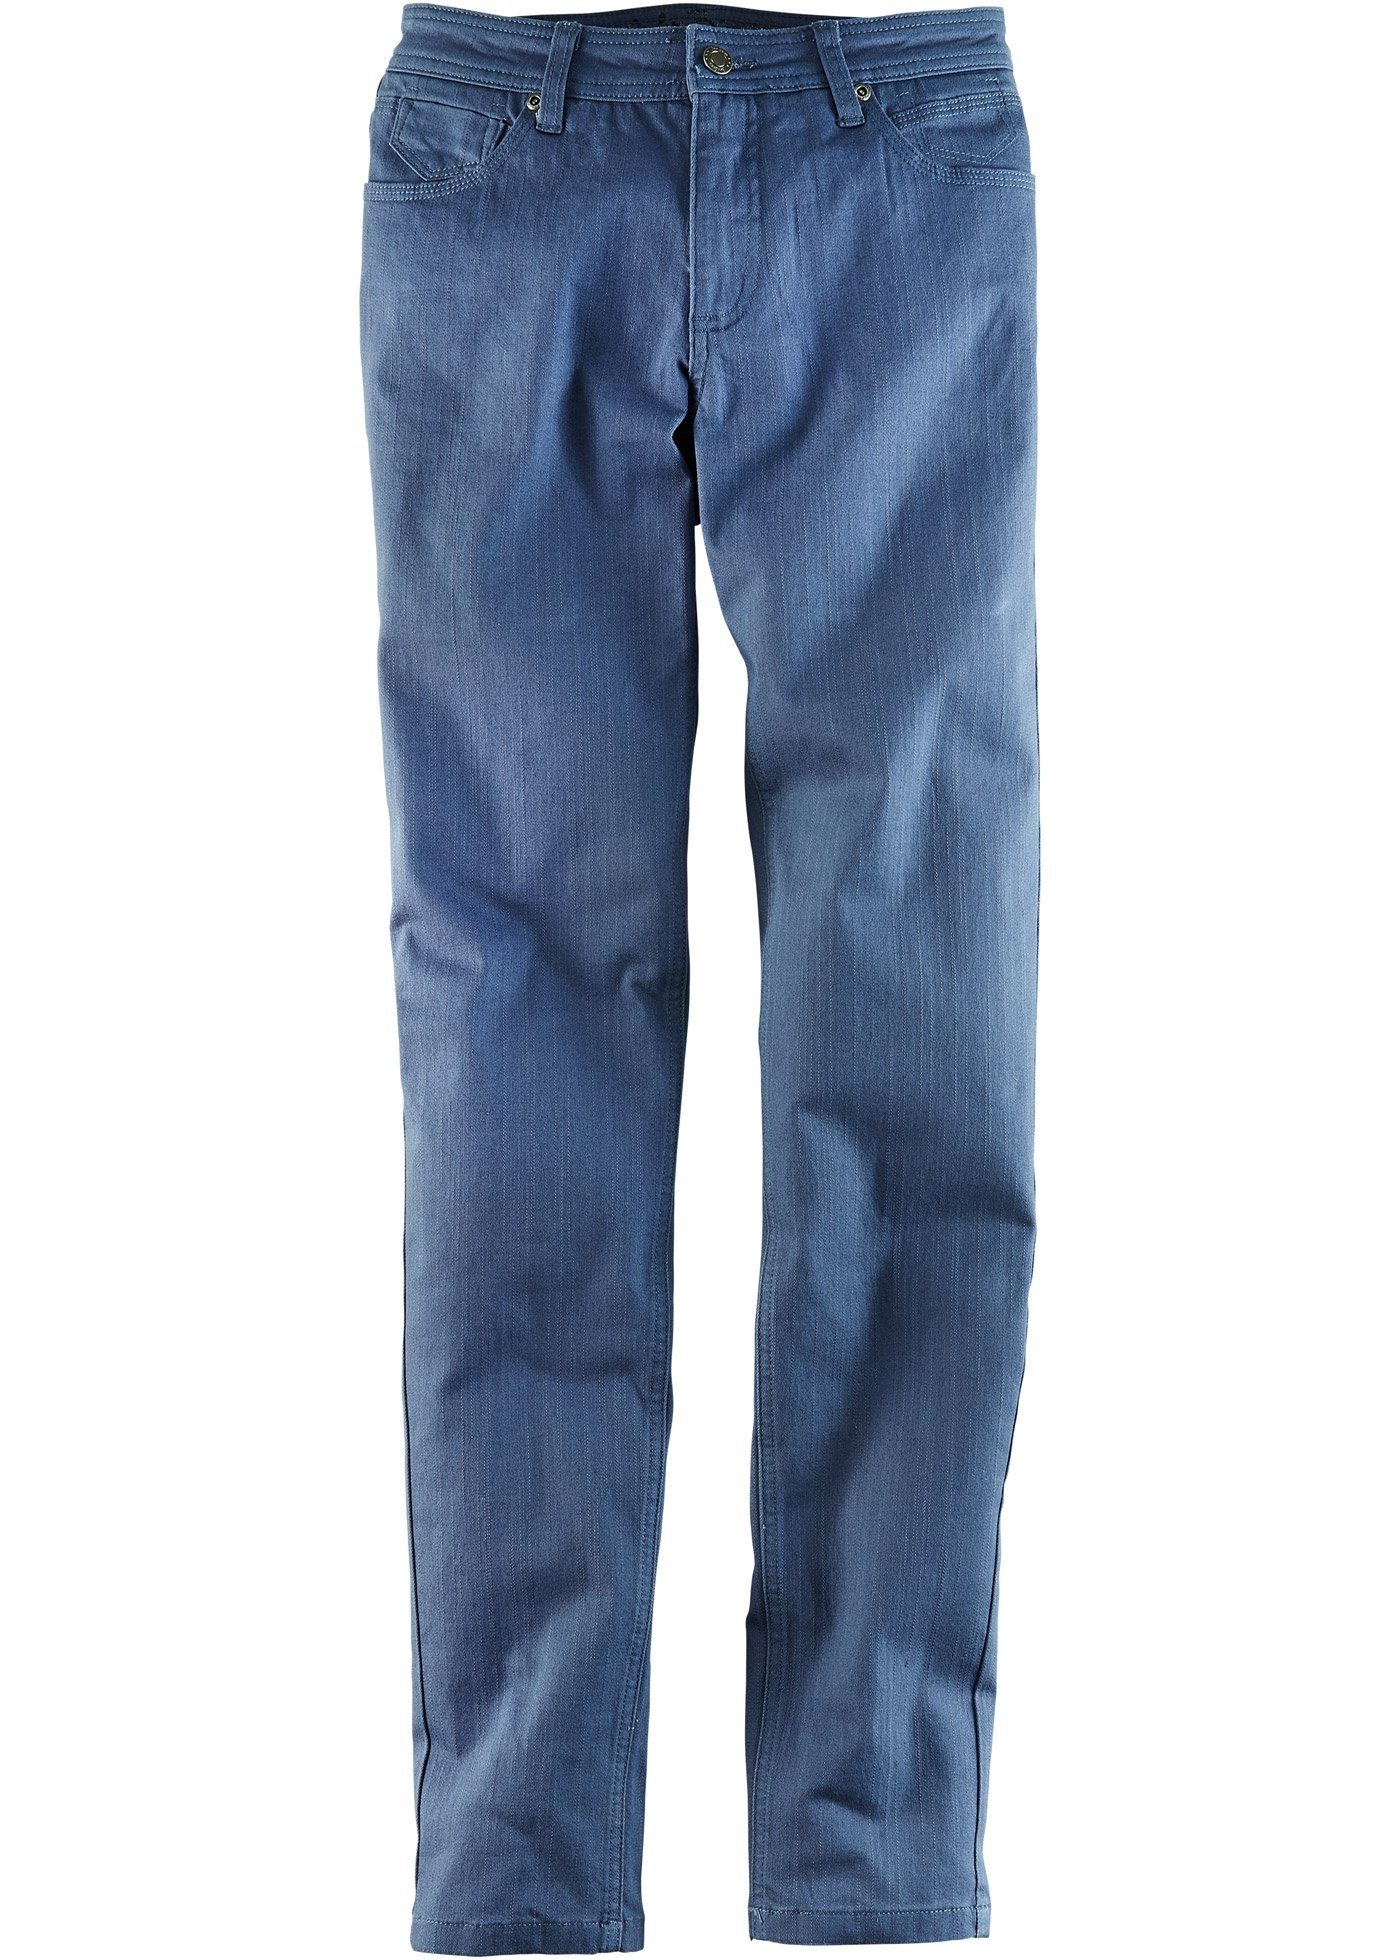 YESET Skinny-fit-Jeans Damen Stretch-Jeans Skinny Hose Chino blau 947304